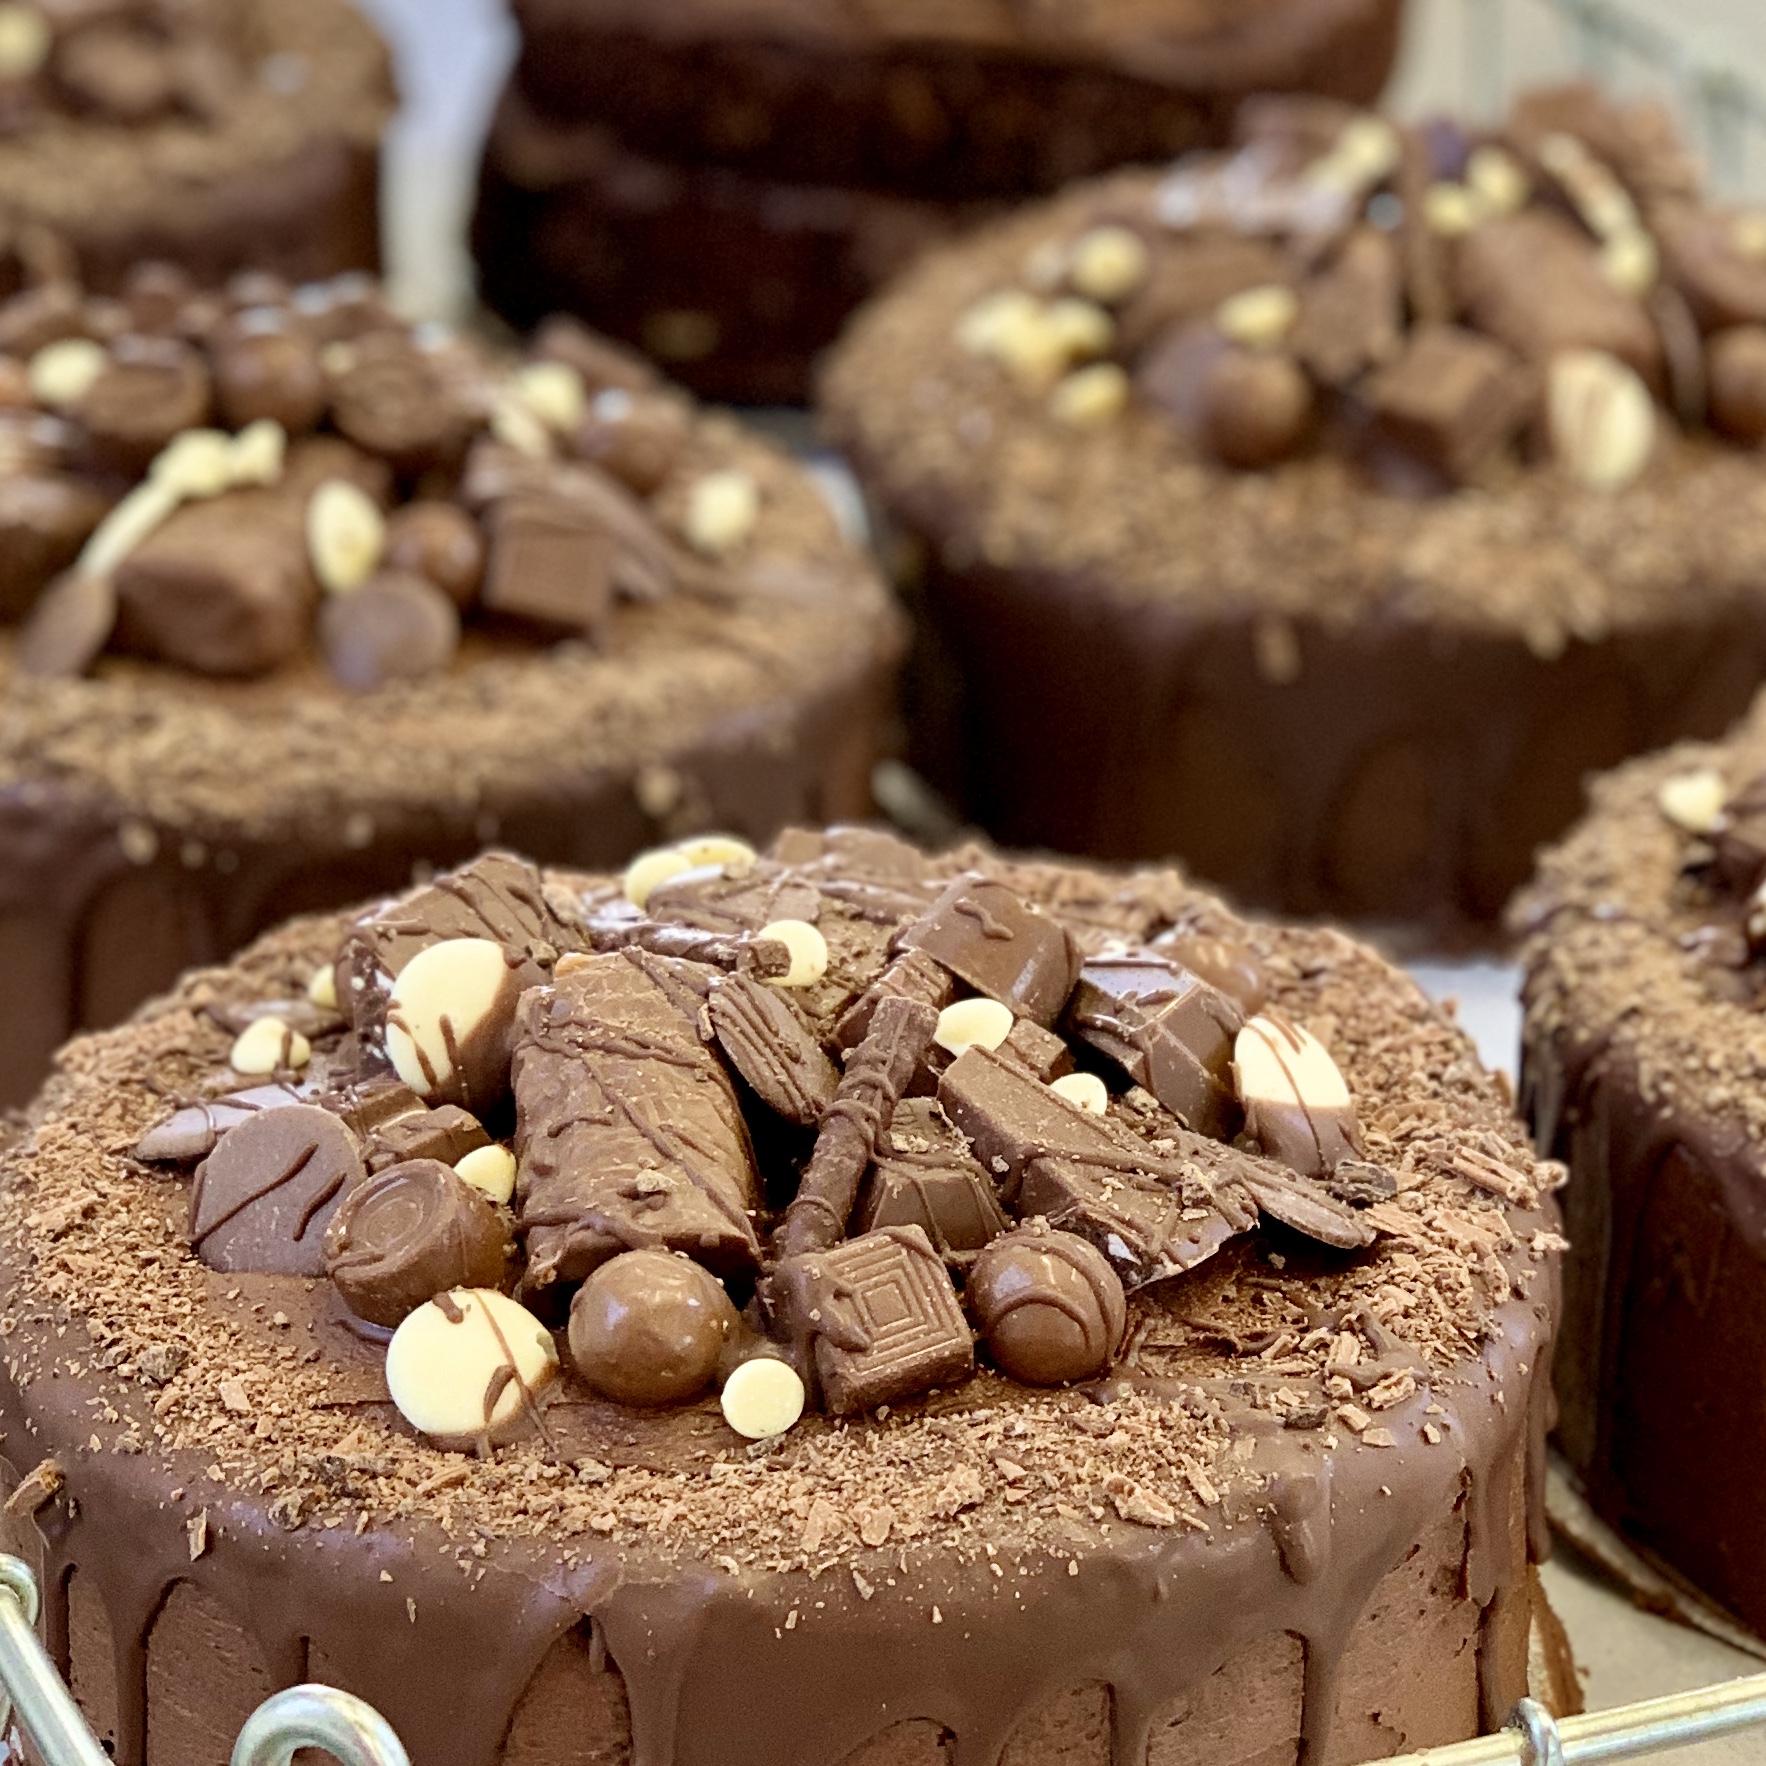 Cakes - Fully Loaded Chocolate Cake